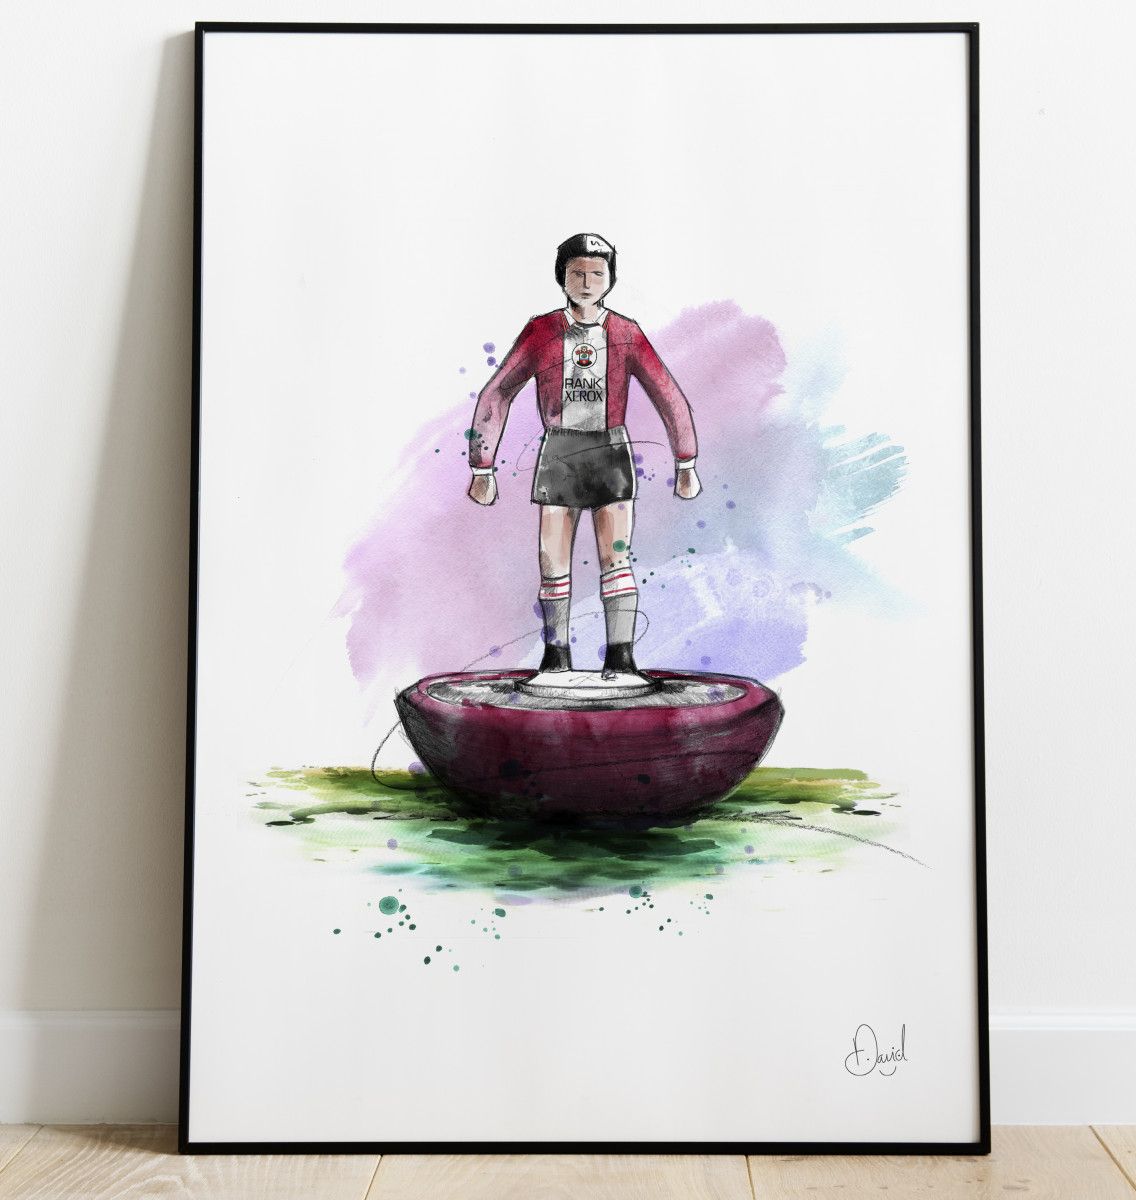 Southampton FC - Retro Subbuteo art print